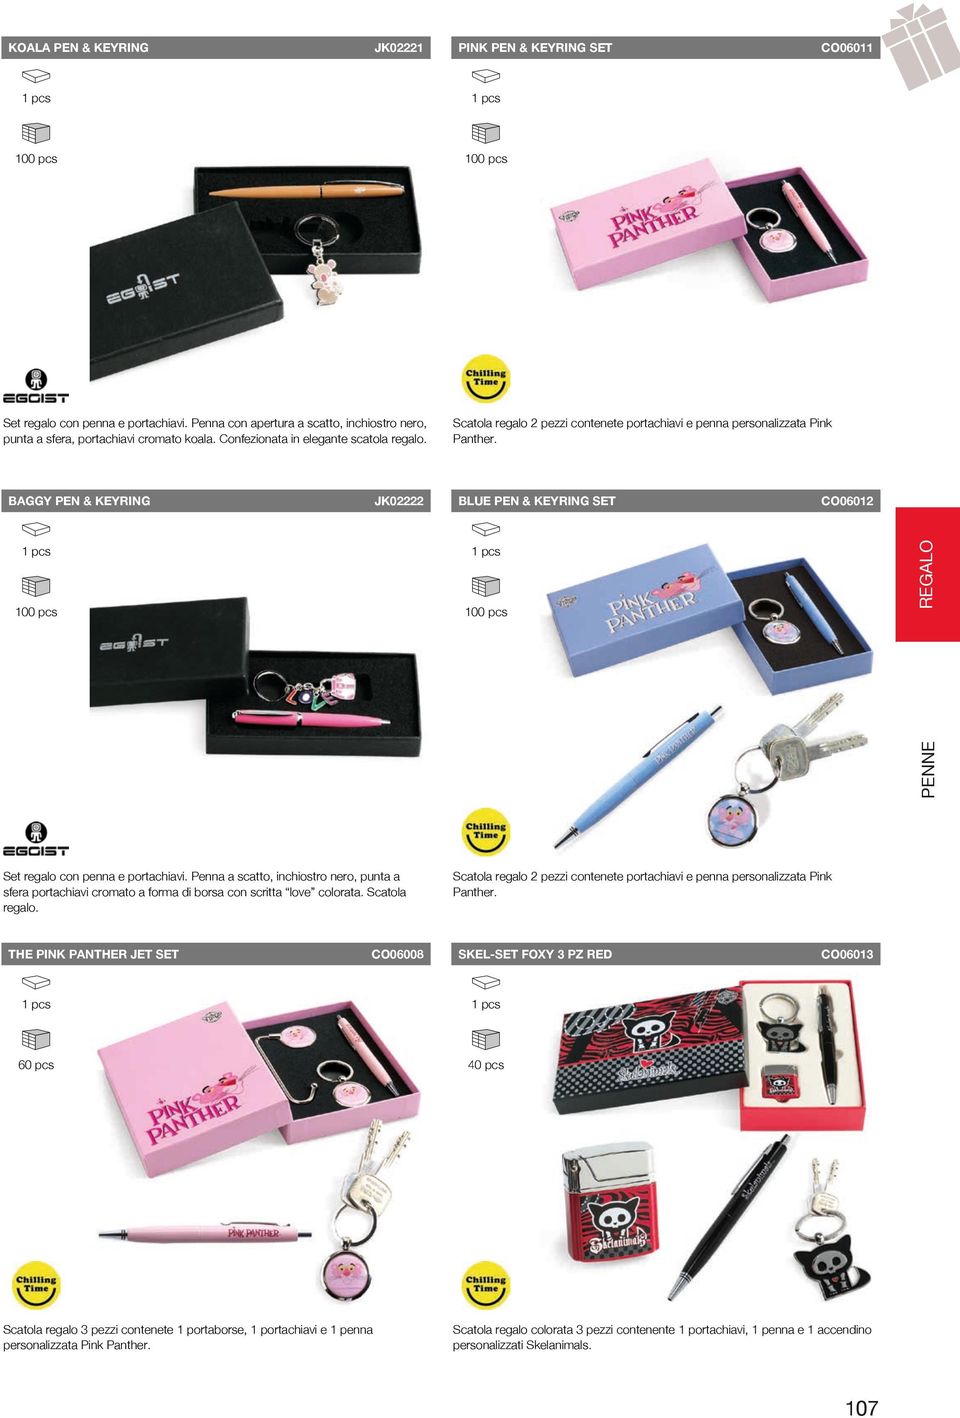 Scatola regalo 2 pezzi contenete portachiavi e penna personalizzata Pink Panther. BAGGY PEN & KEYRING JK02222 BLUE PEN & KEYRING SET CO06012 REGALO 2,75 8,00 1,94 7,30 479 479 1.057 1.